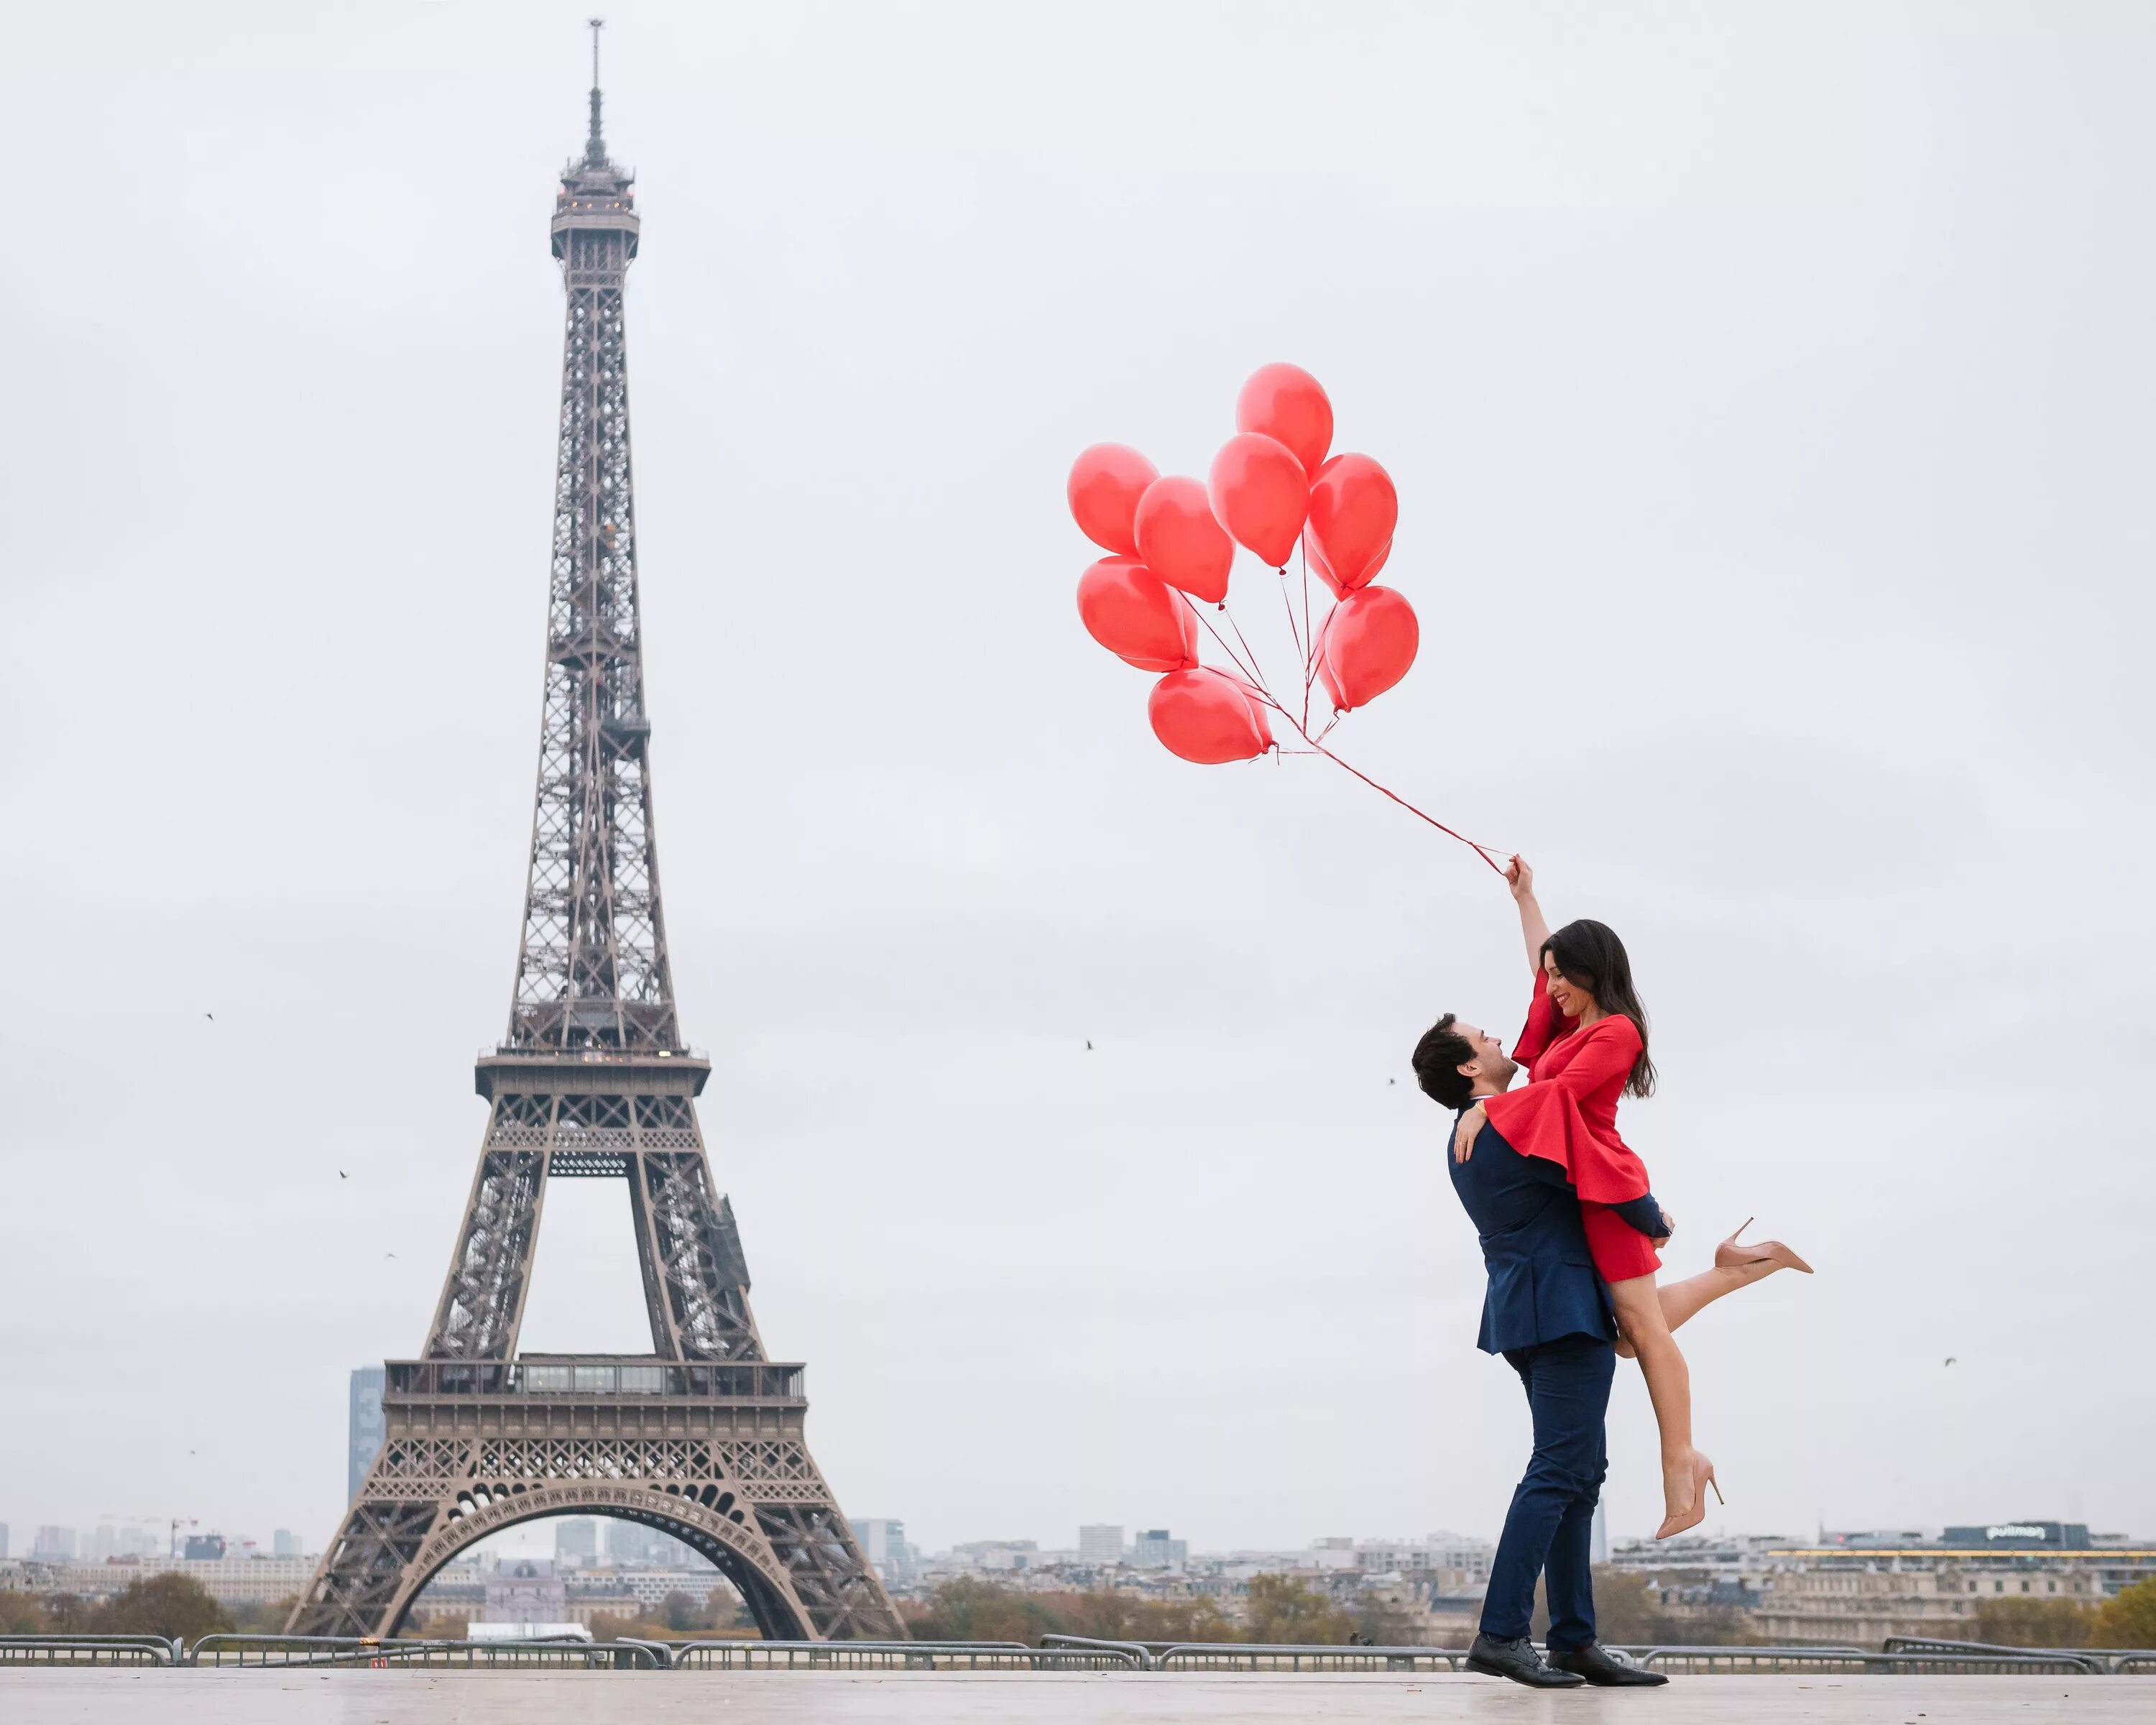 Шарами парижа. Влюбленные в Париже. На фоне Эйфелевой башни. Франция романтика. Влюбленная пара на фоне Эйфелевой башни.